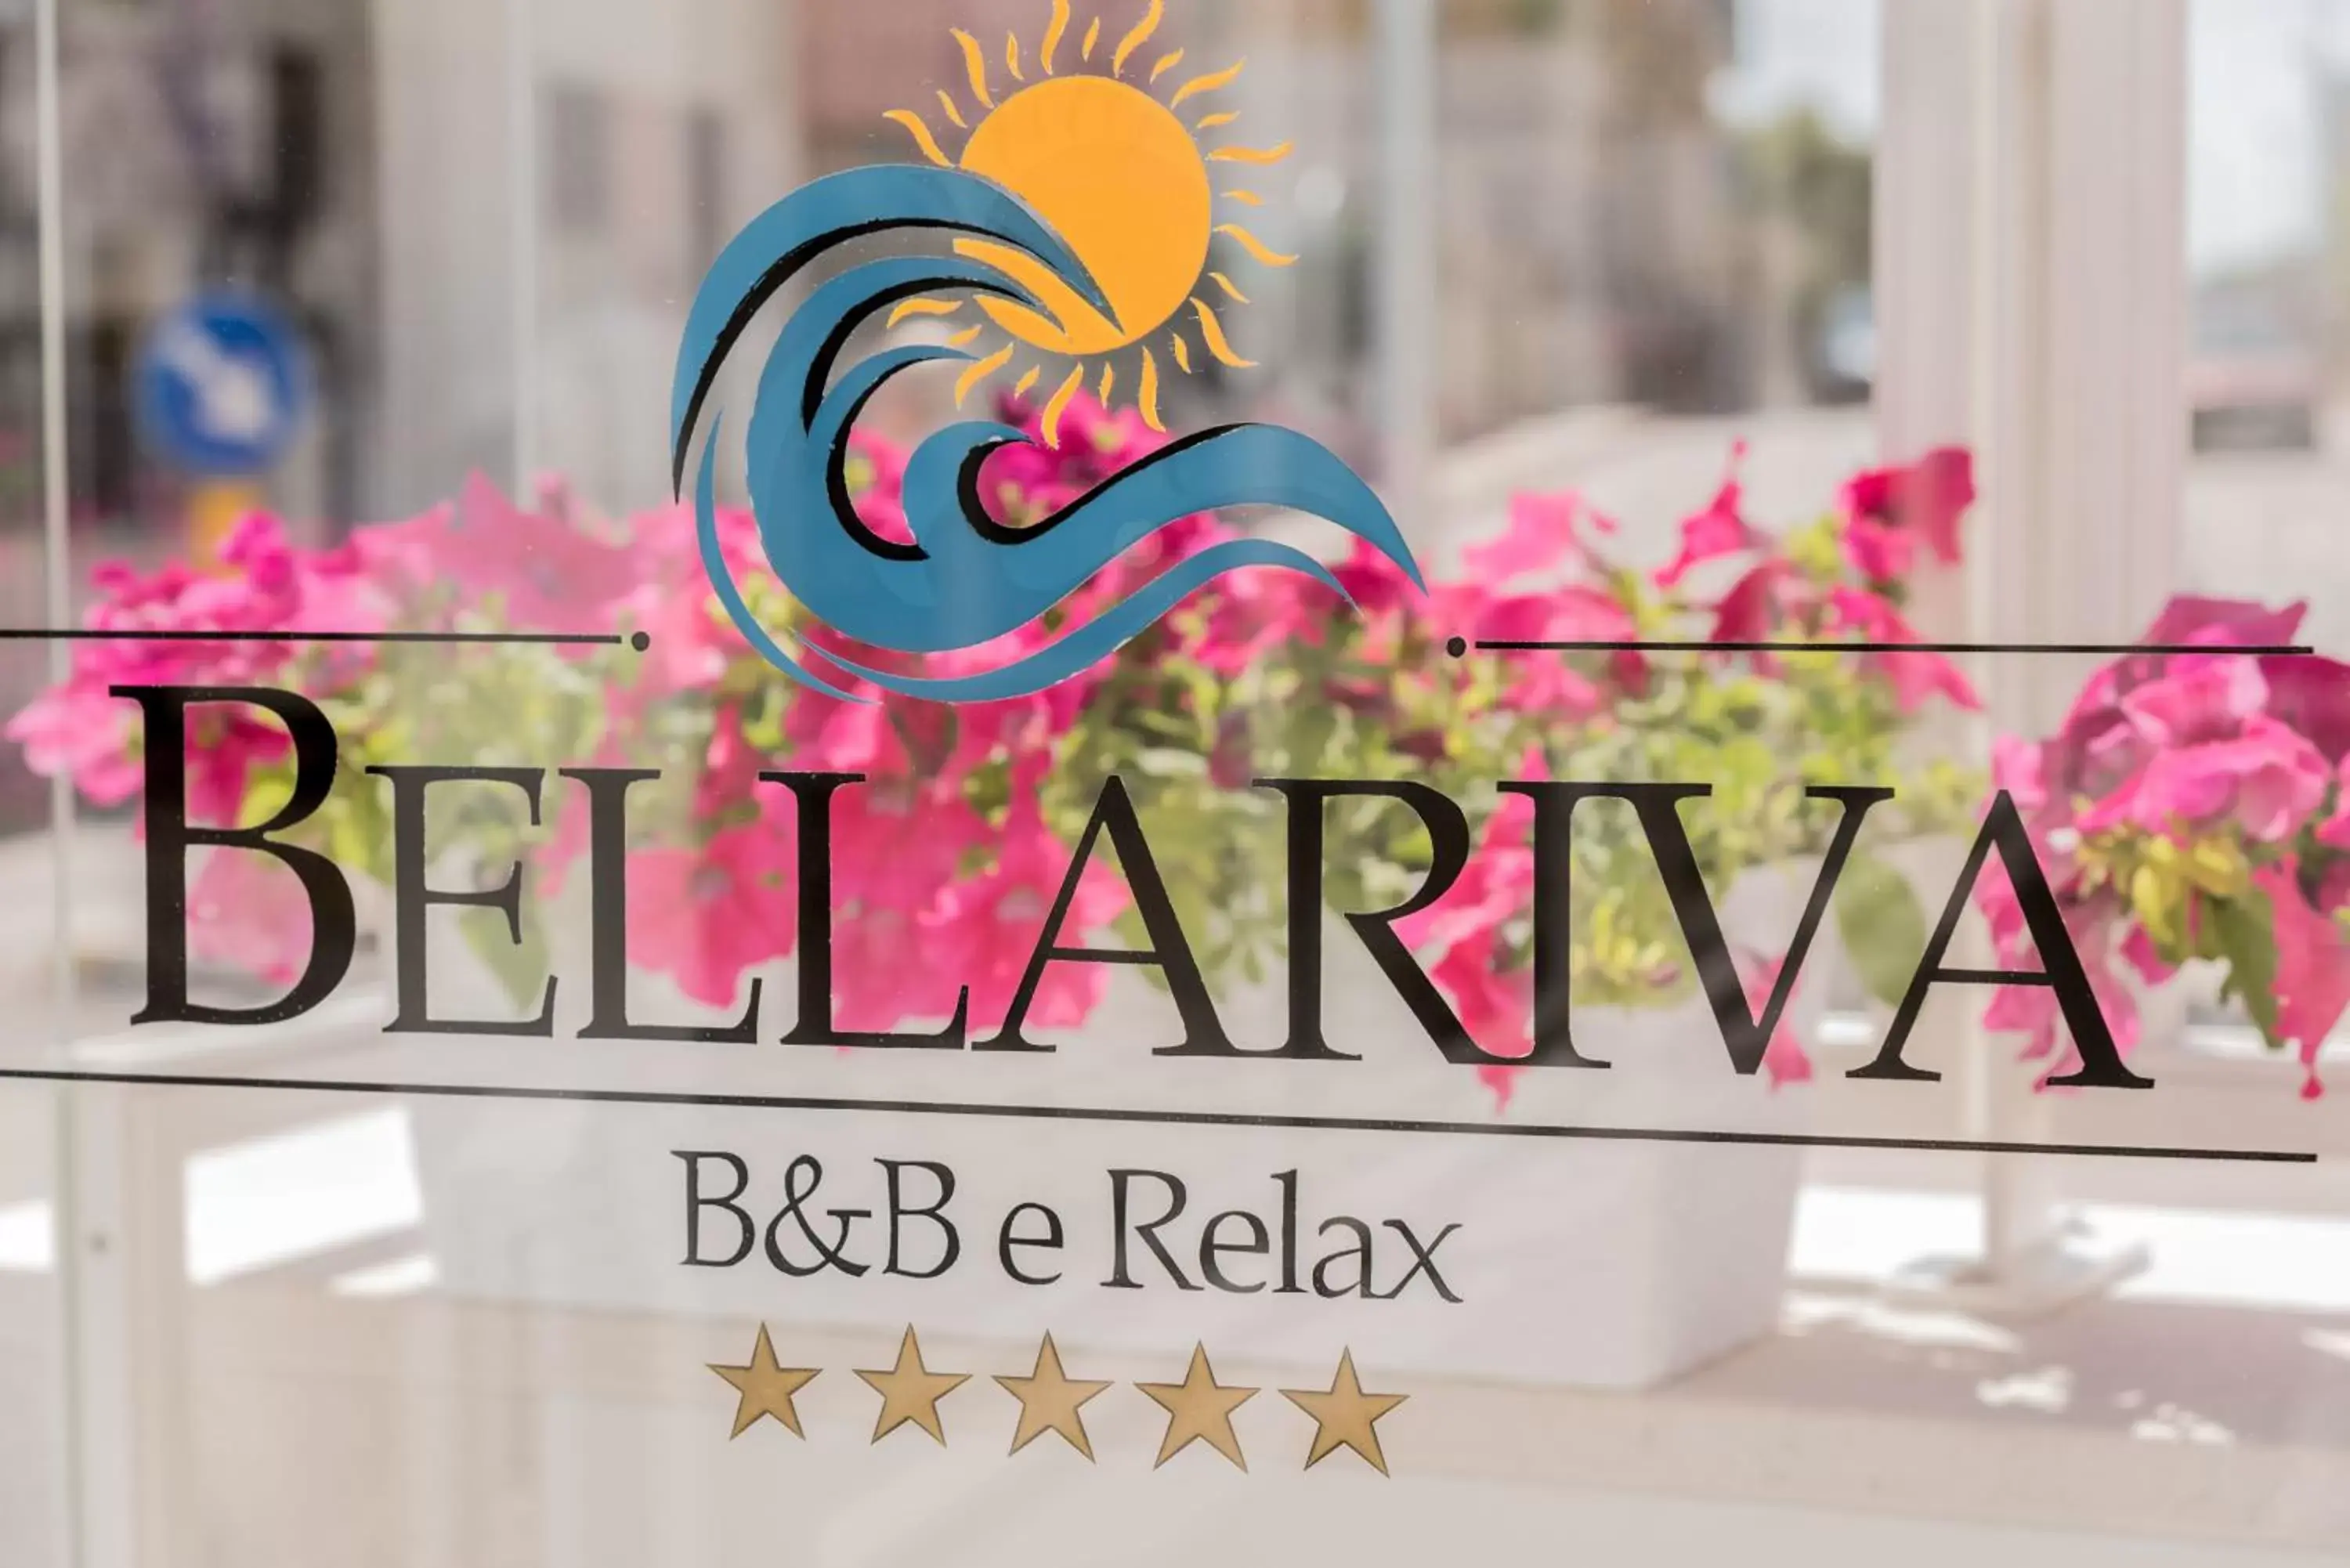 Garden, Property Logo/Sign in Bellariva Monopoli B&B e Relax